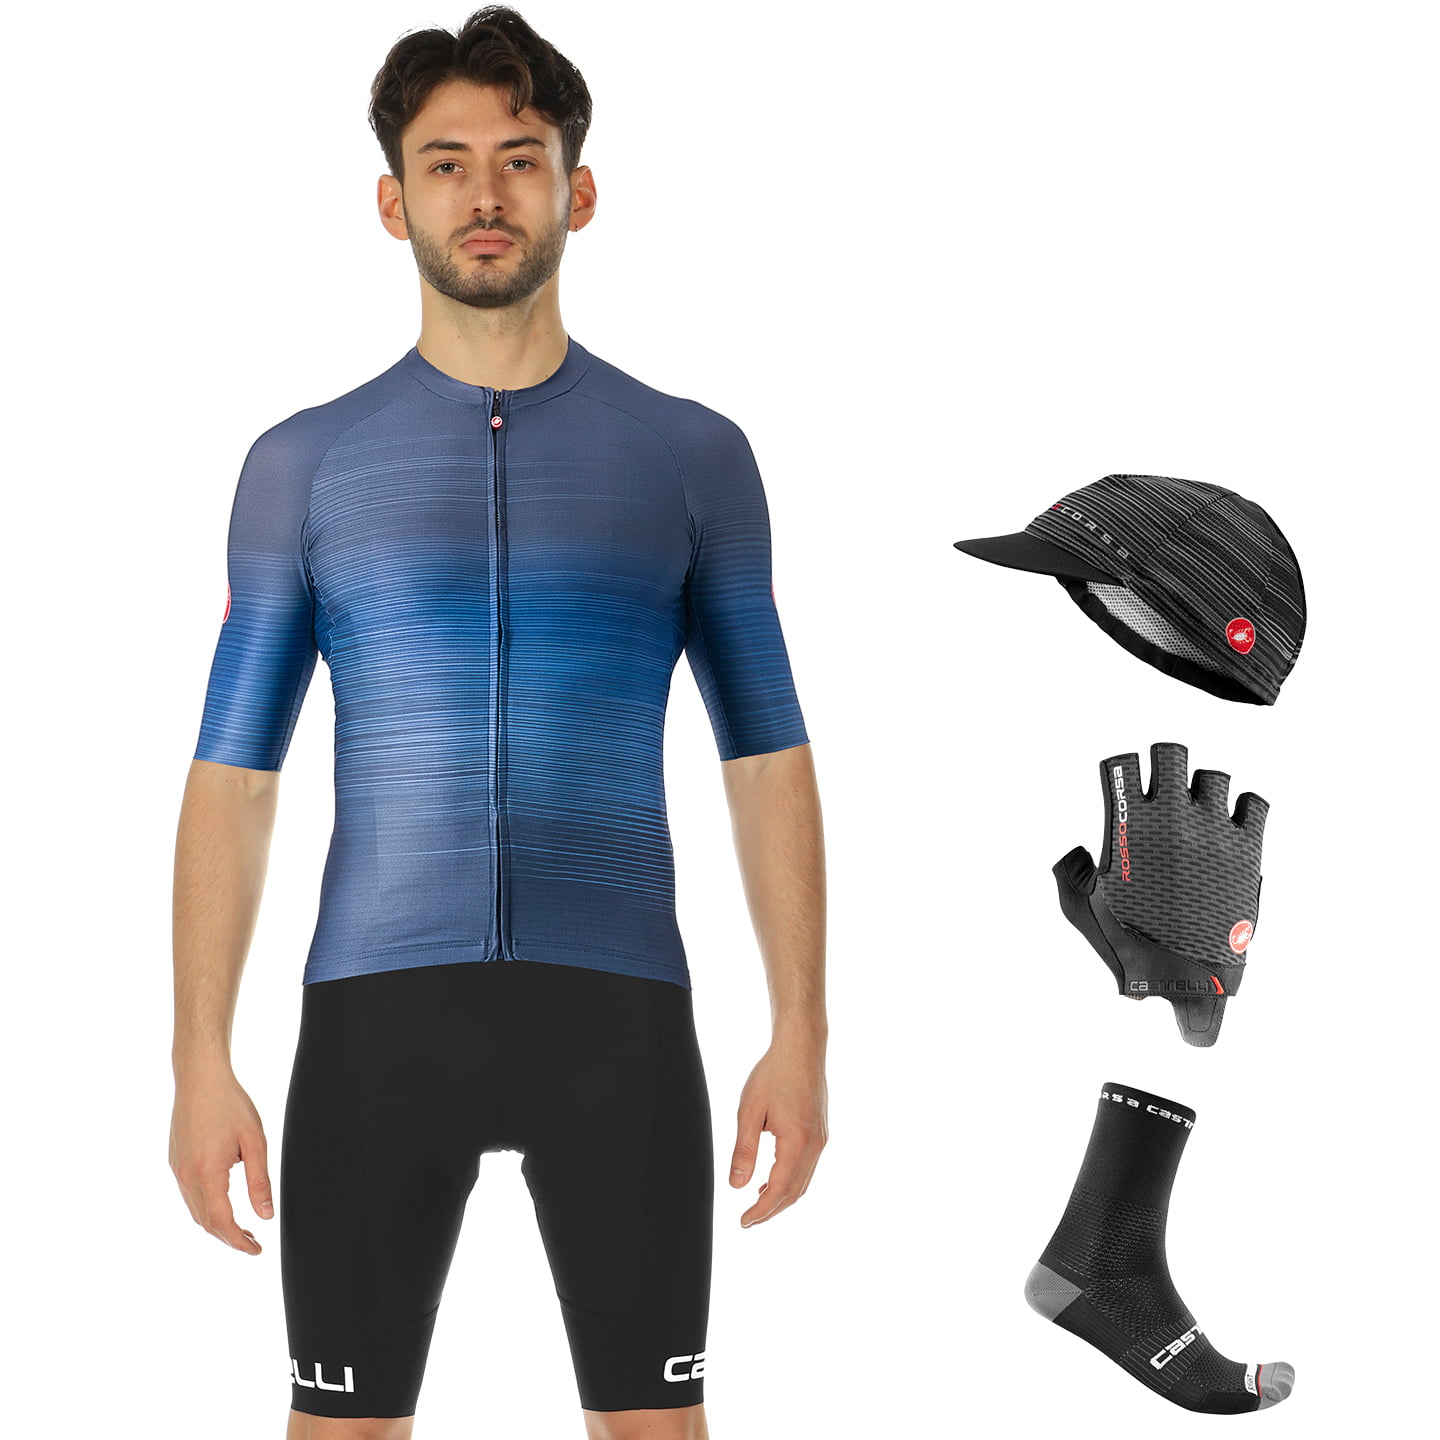 CASTELLI Aero Race 6.0 Maxi-Set (5 pieces) Maxi Set (5 pieces), for men, Cycling clothing